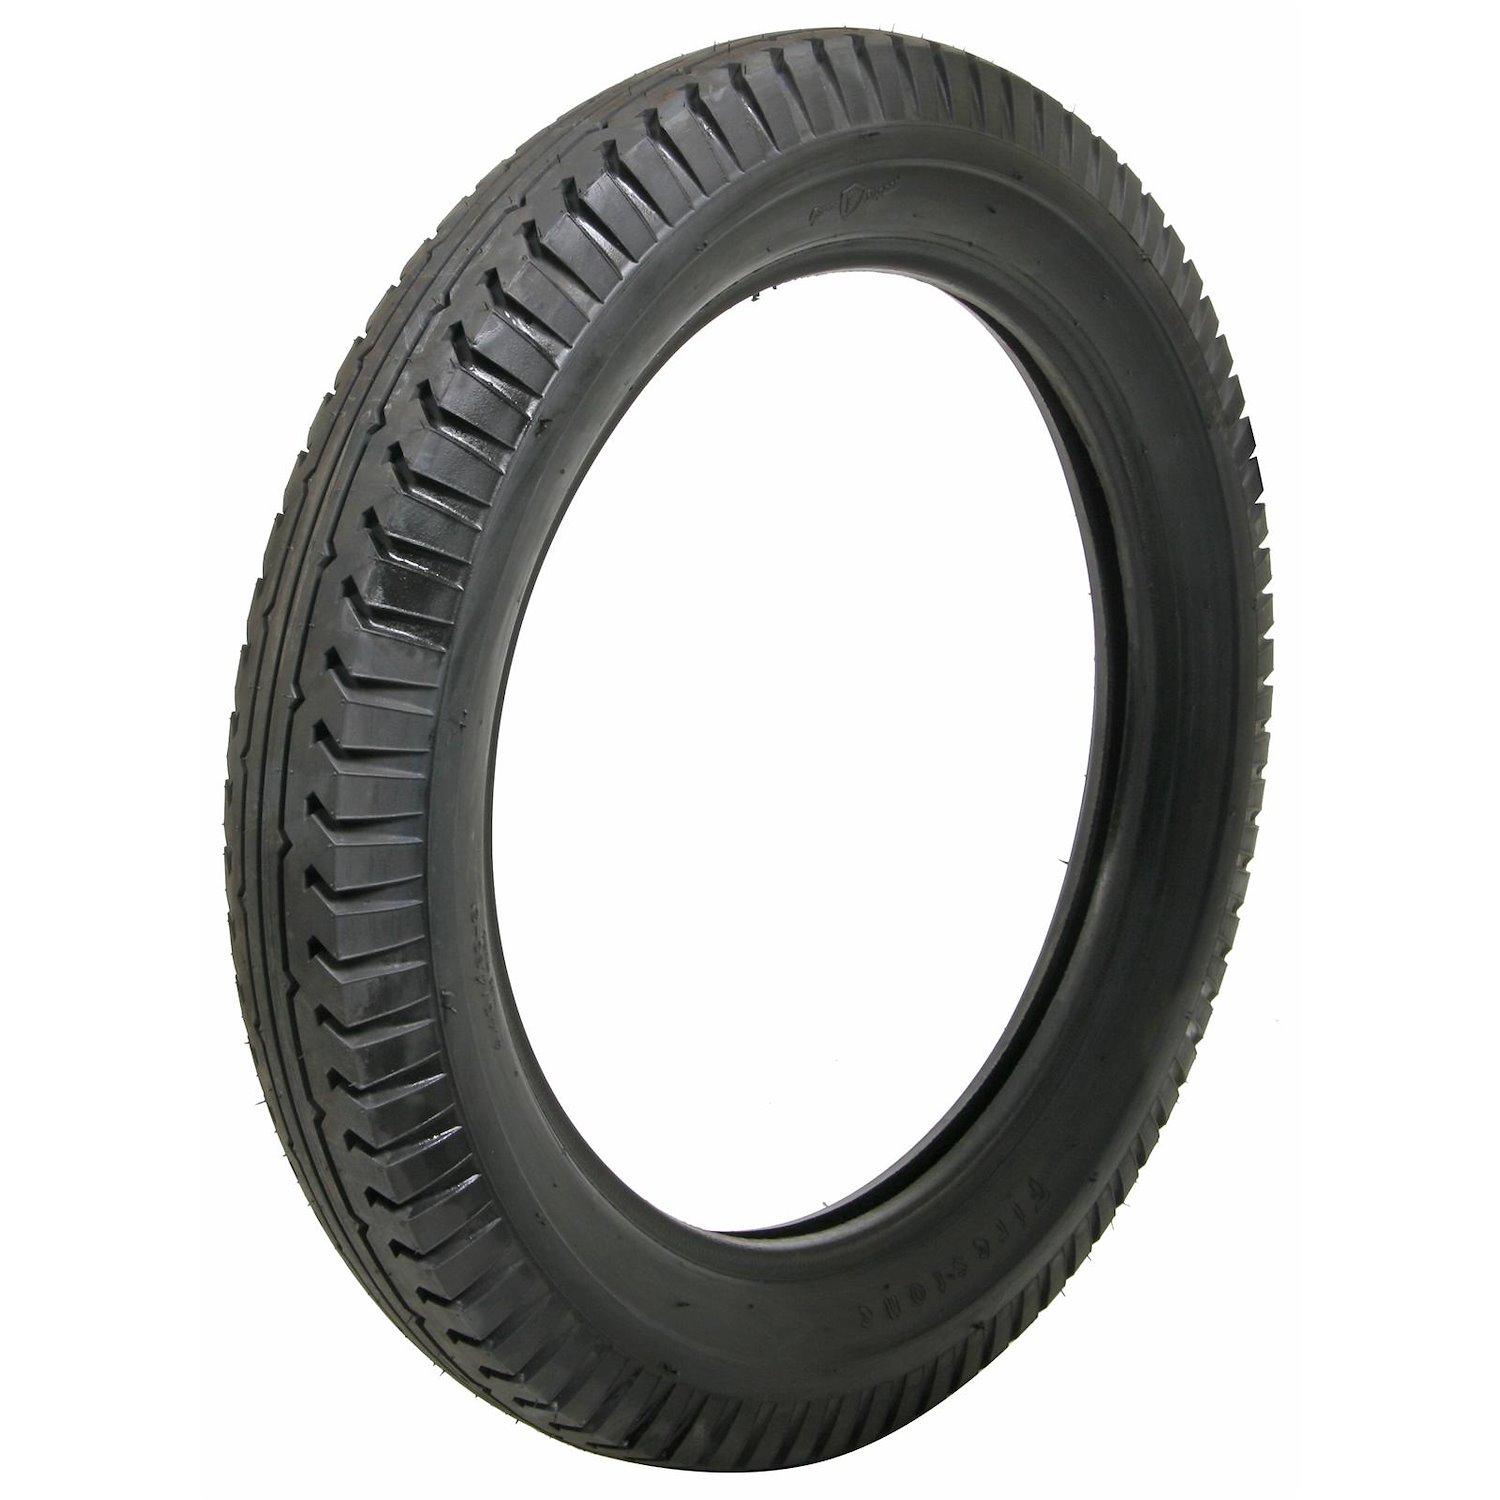 775970 Tire, Firestone, 440/450-21